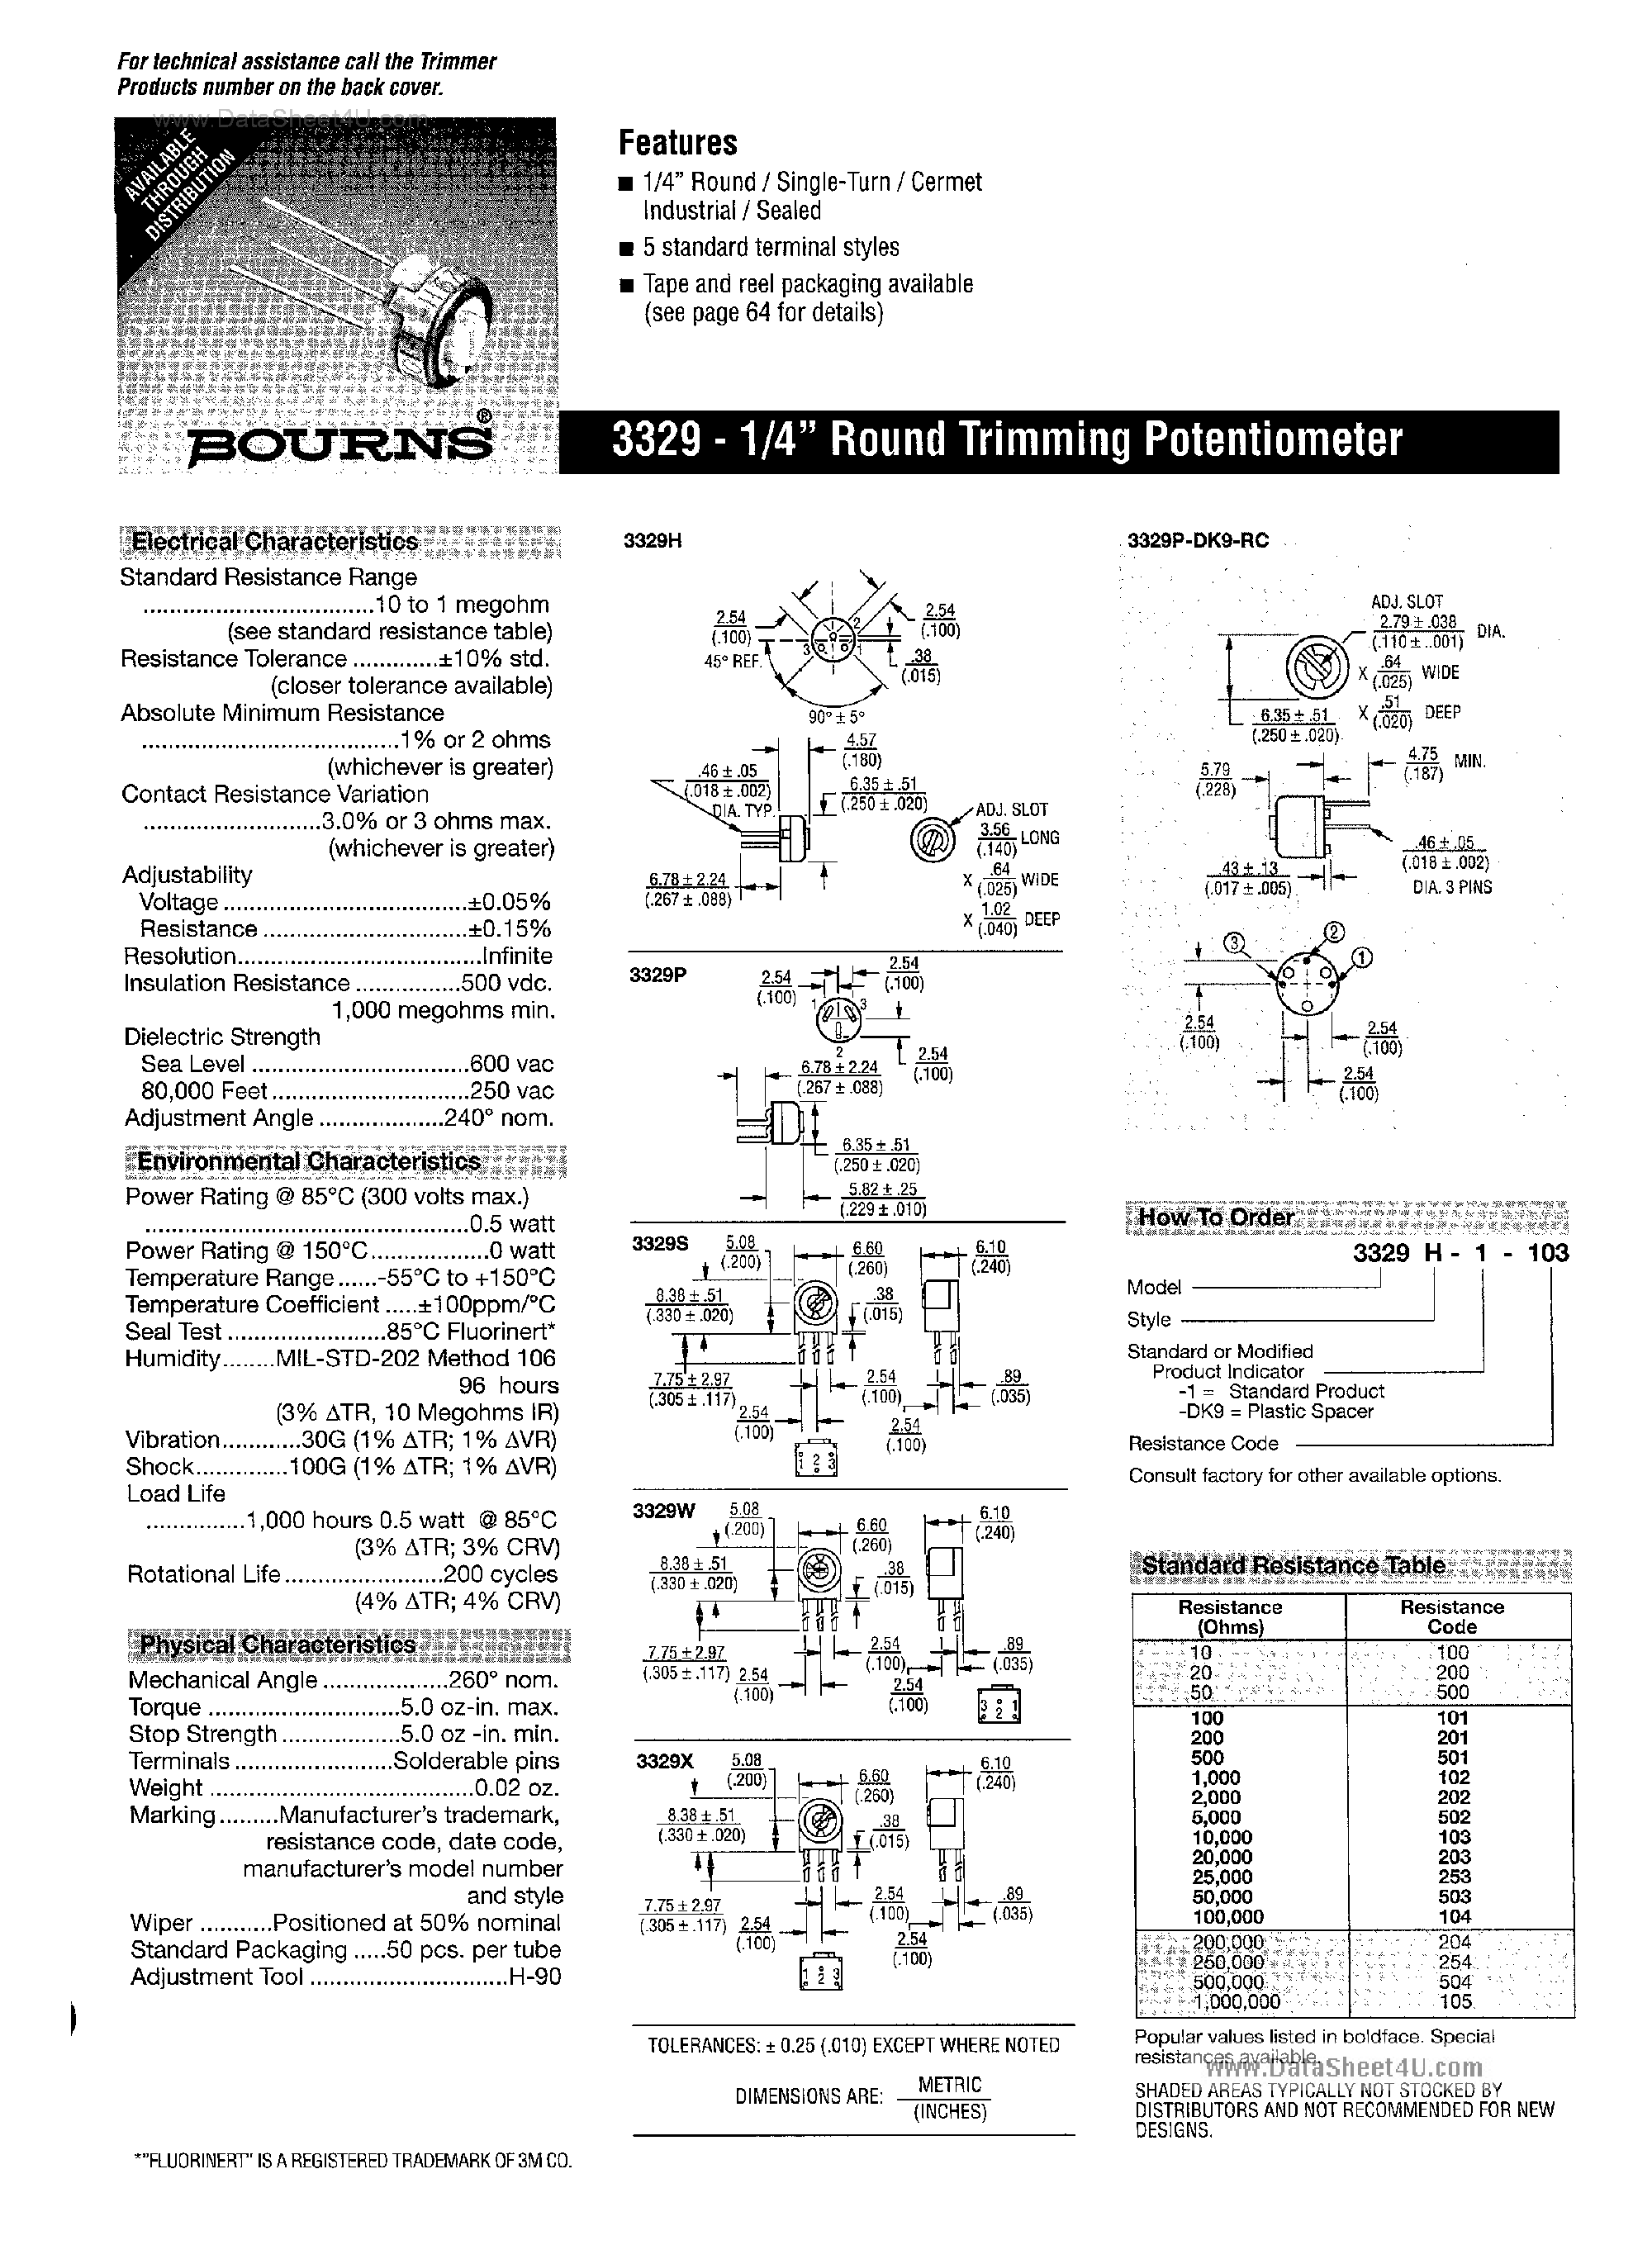 Datasheet 3329H-x-xxx - (3329 Series) Trimming Potentiometer page 1